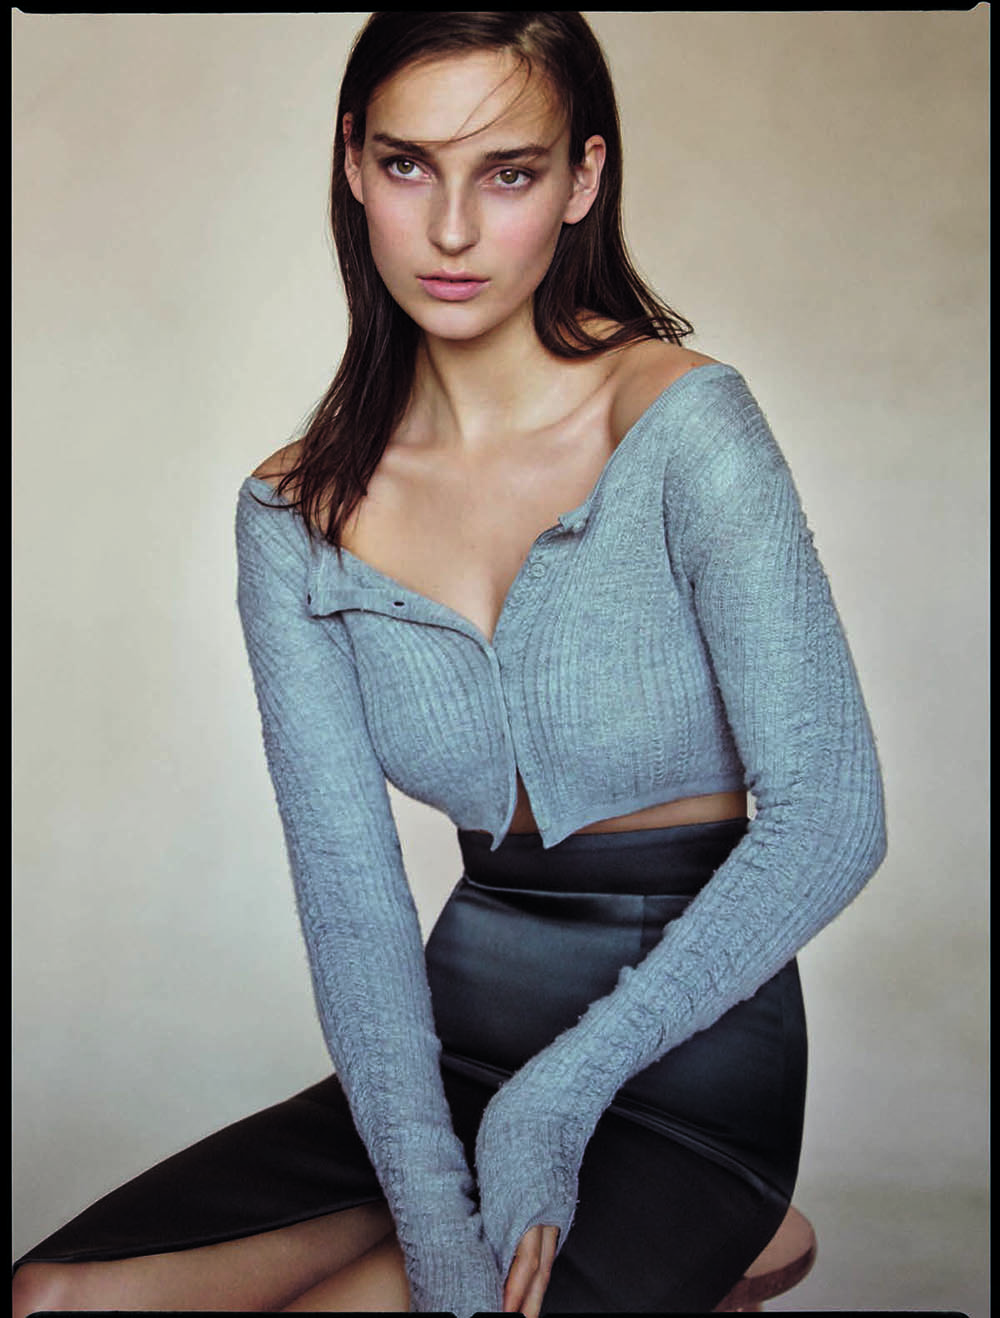 Julia Bergshoeff by Stas Komarovski for Vogue Poland March 2020